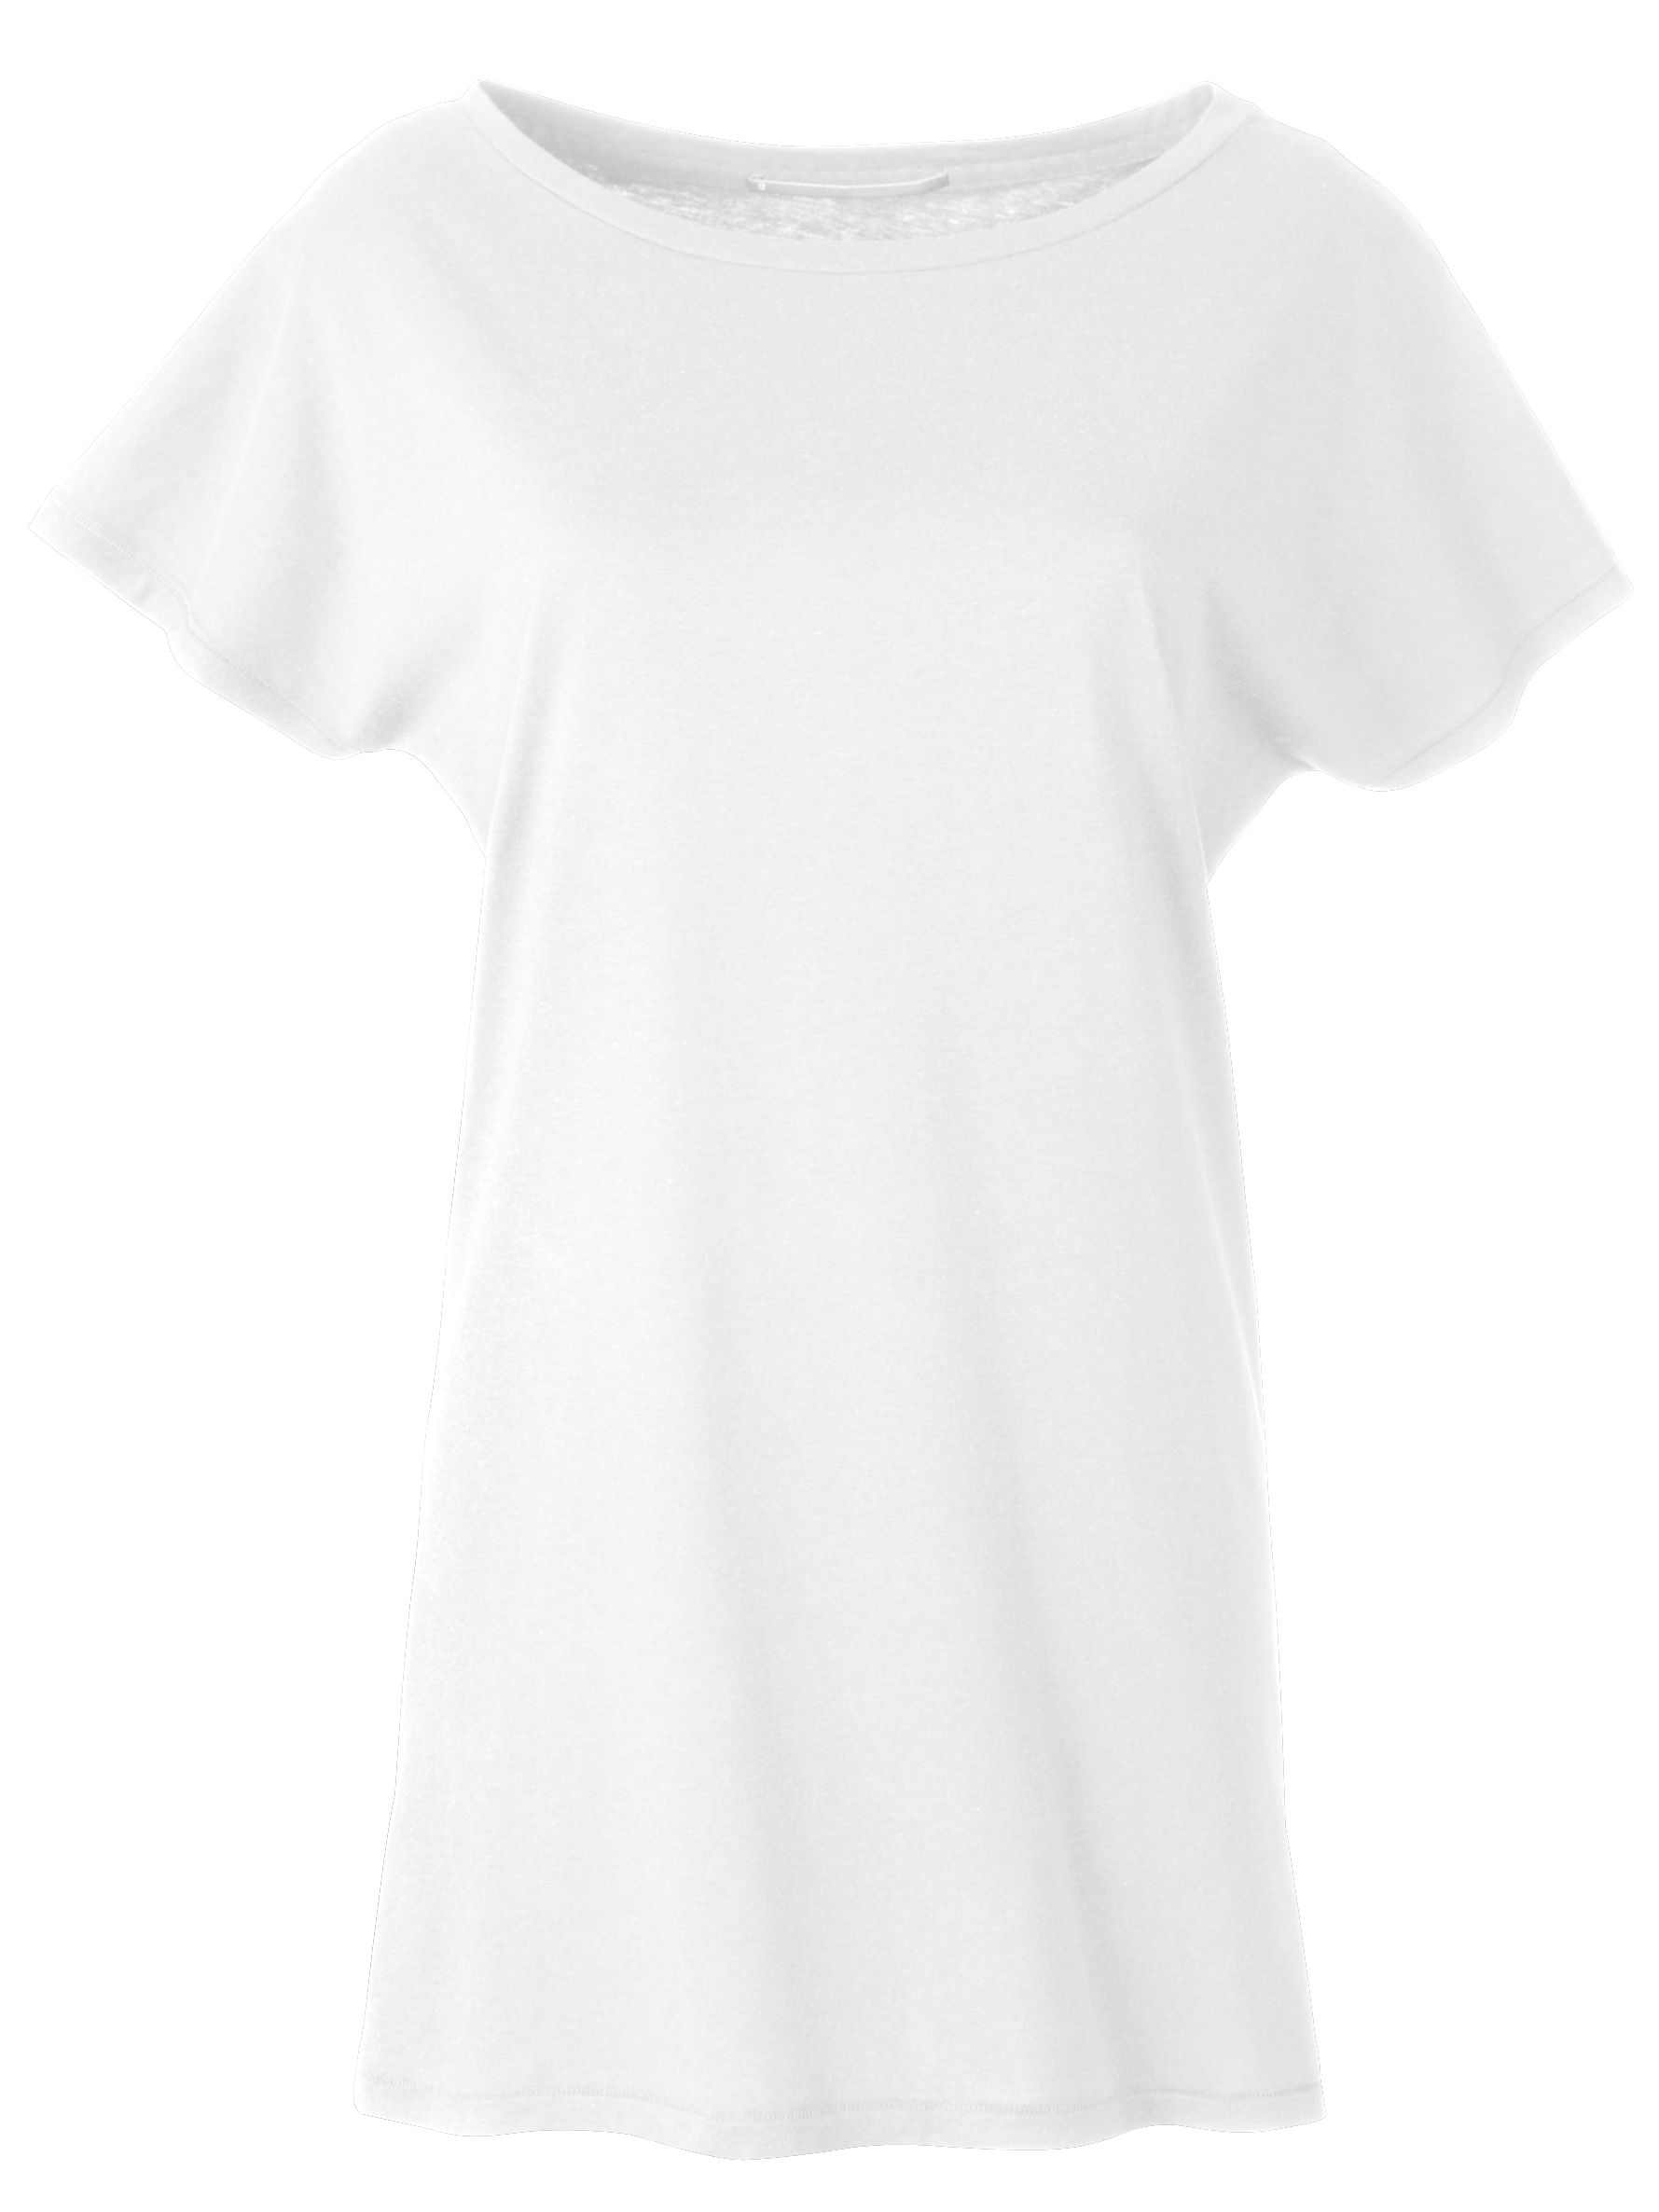 Boat Neck Long T-Shirt, White